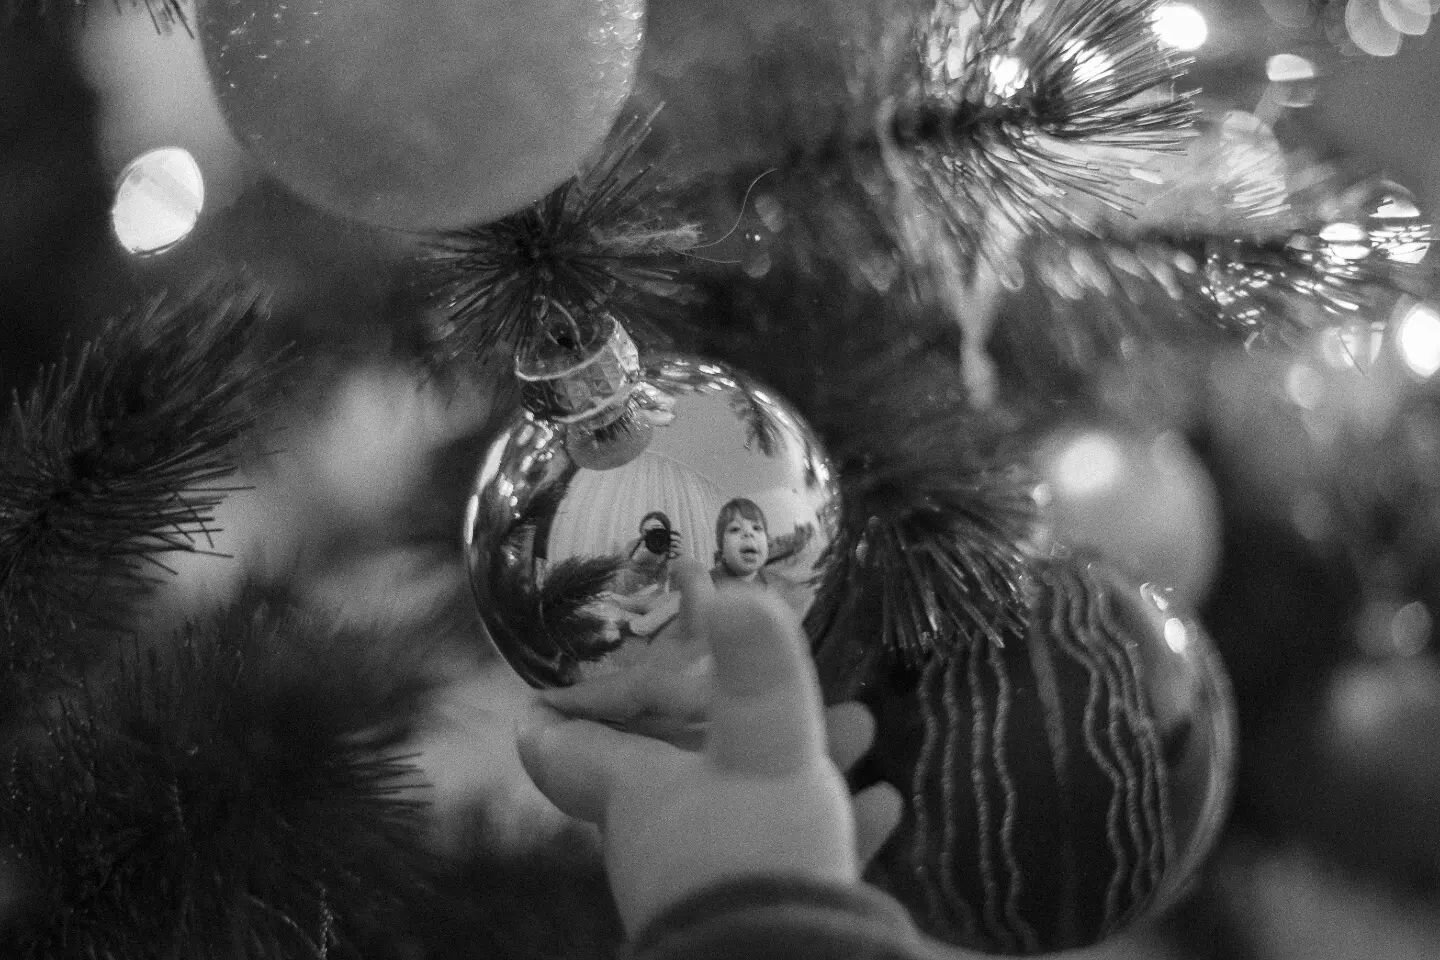 ◗around the christmas tree 🎄
December 2021

.
.
.
.
.

#documentyourdays #itsallaboutthestills
#photocinematica #somewheremagazine #slowdownwithstills #bnw_greatshots #bnwphotographyofinstagram #collectivemag #rincorrerelabellezza #seasonspoetry